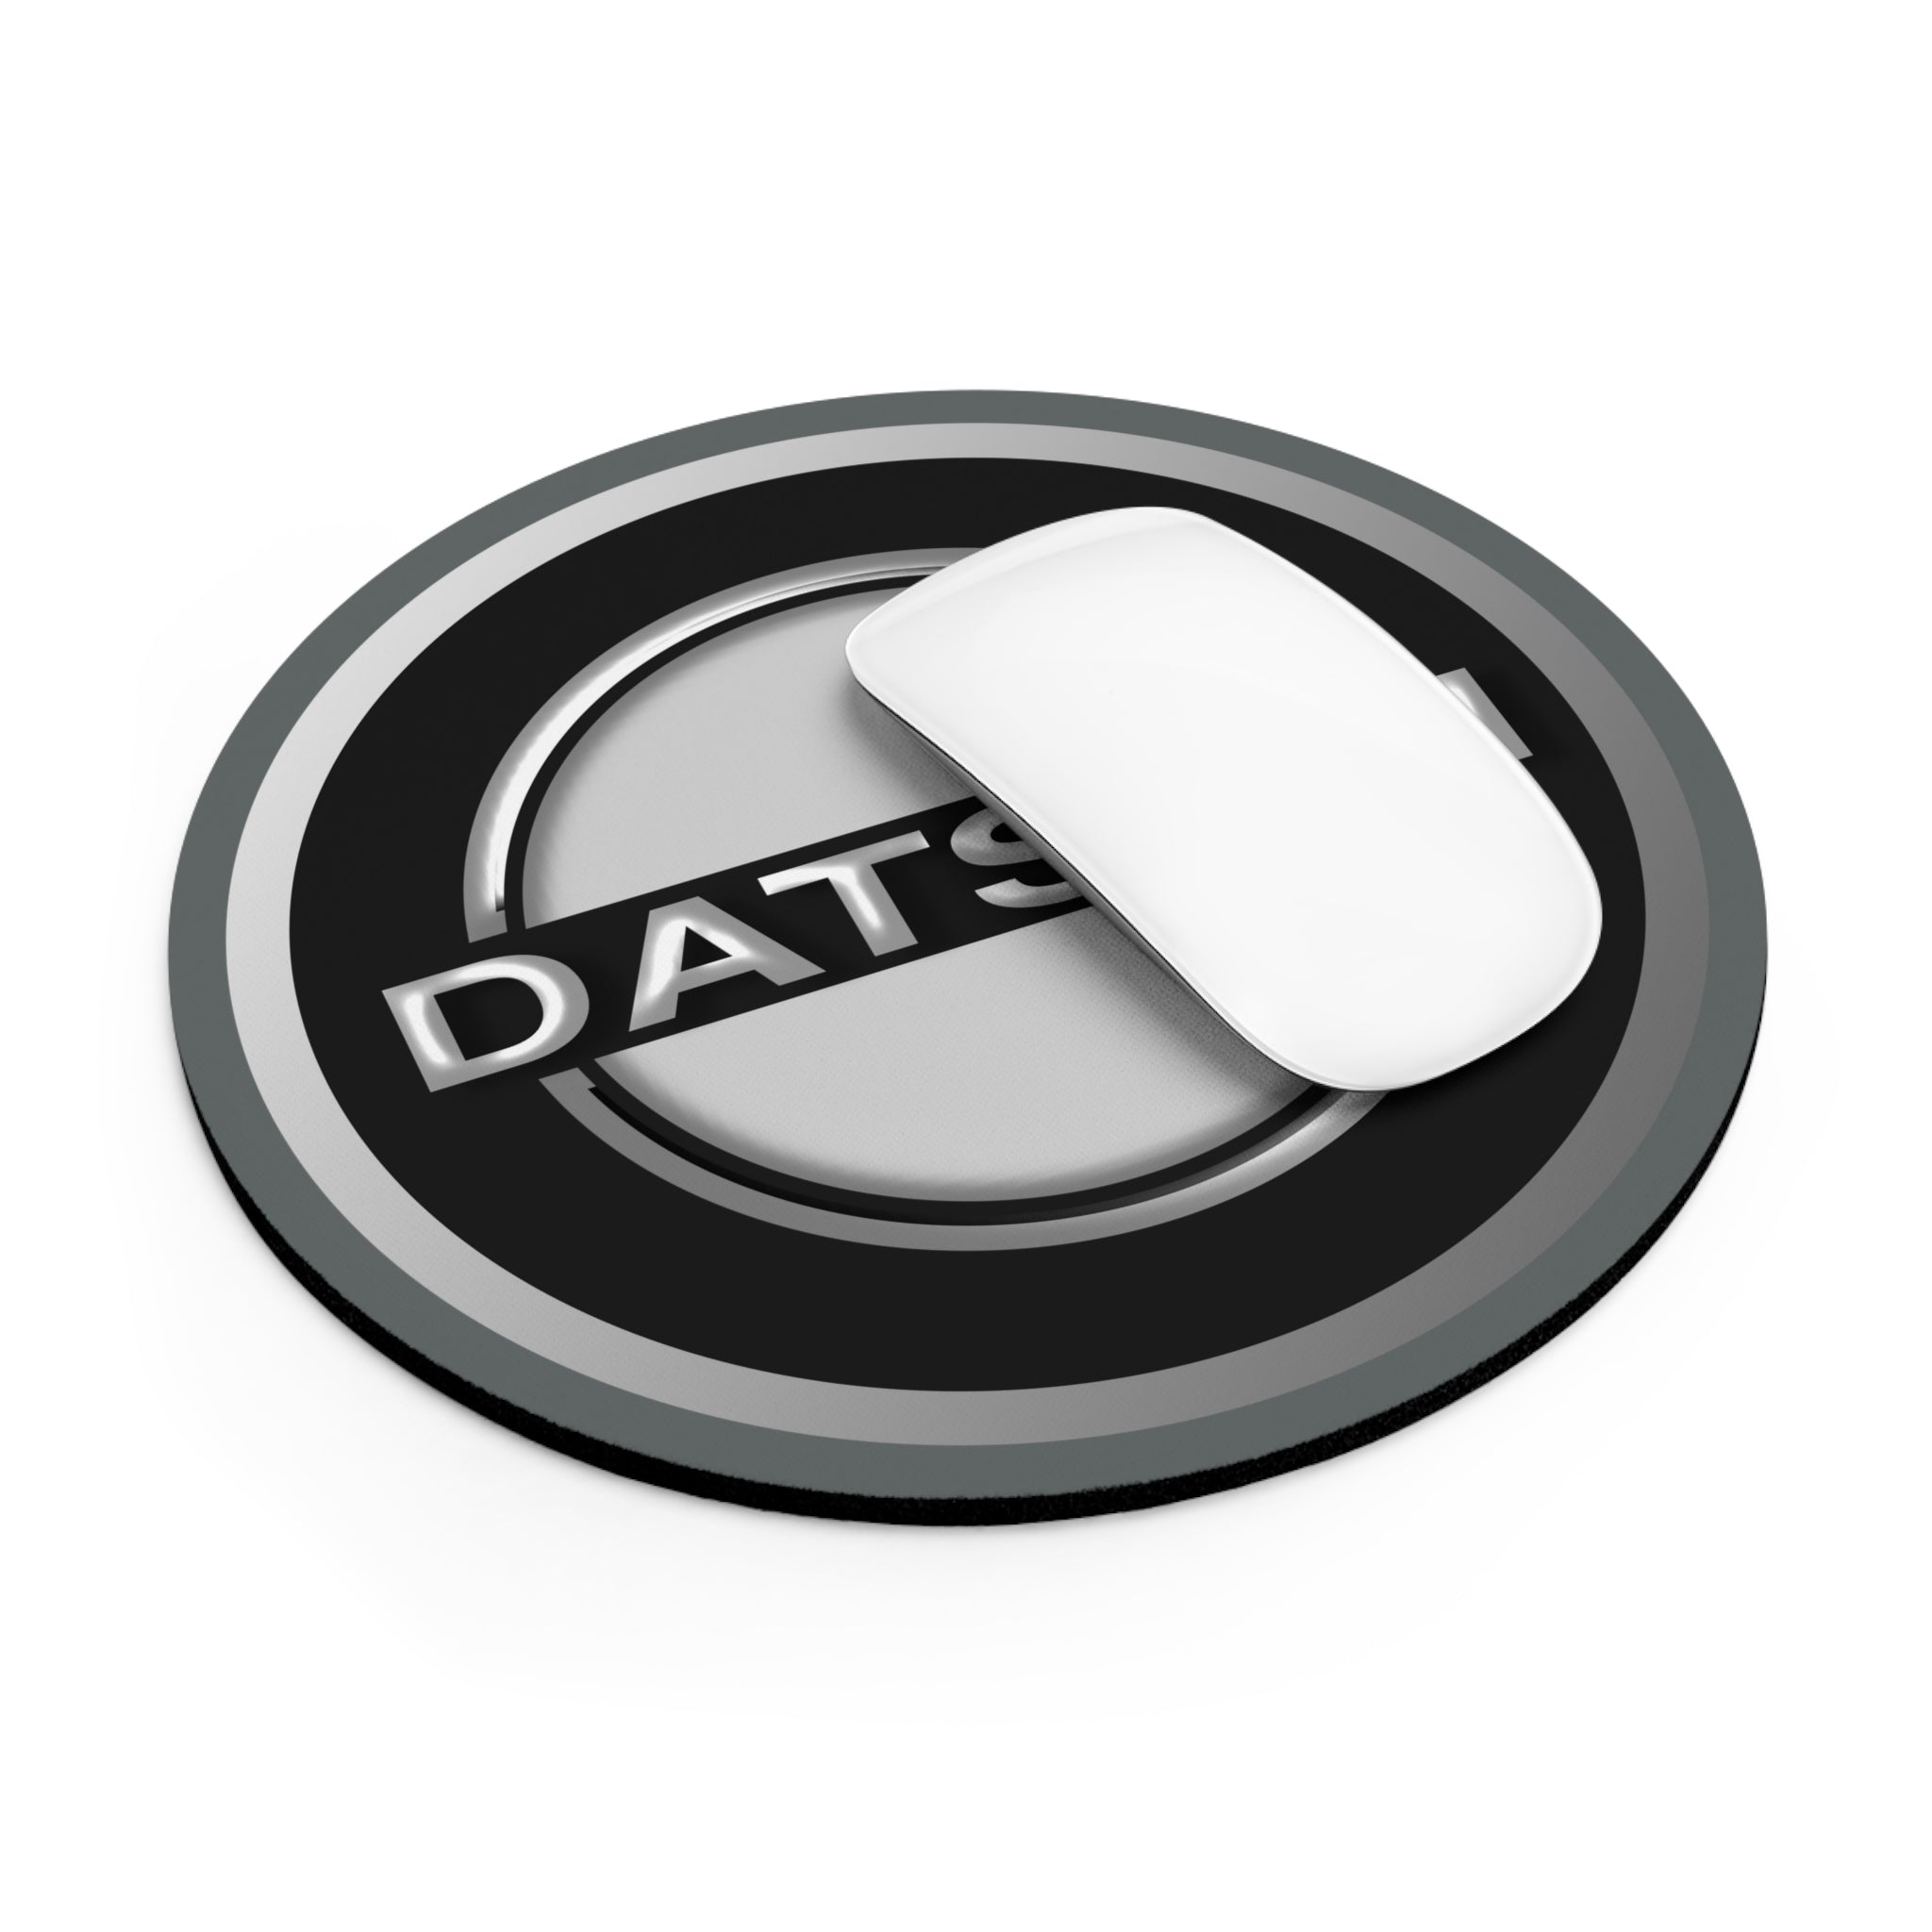 Datsun Emblem Round Mousepad